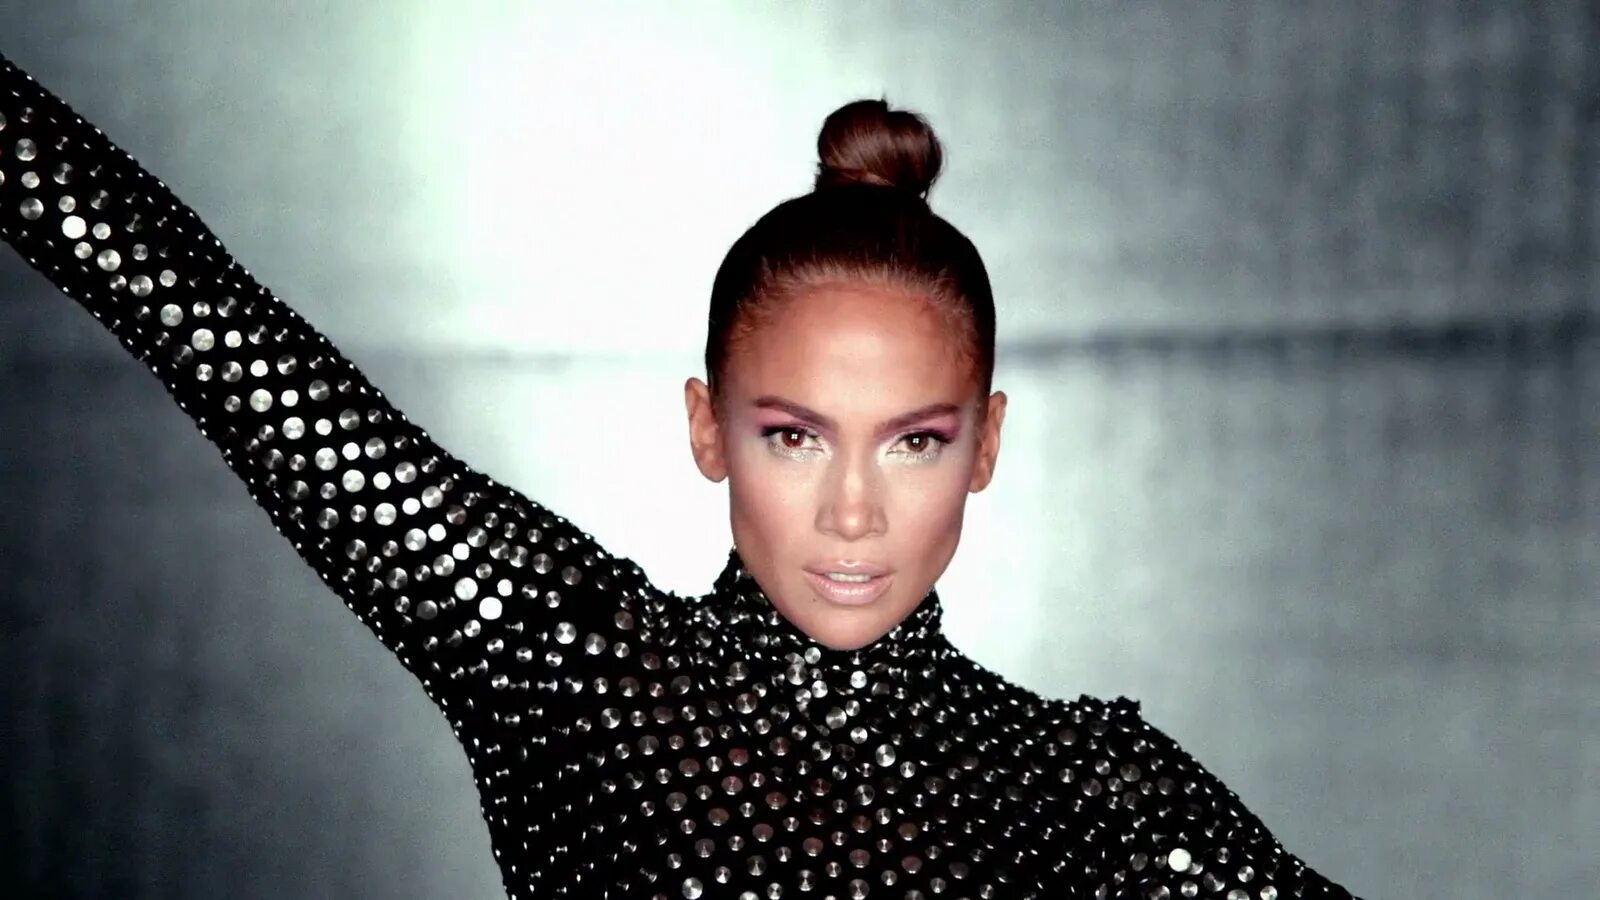 Jennifer Lopez Dance. Mooz Dance. Jennifer Lopez Dance again. Jennifer Lopez feat. Pitbull Dance again.